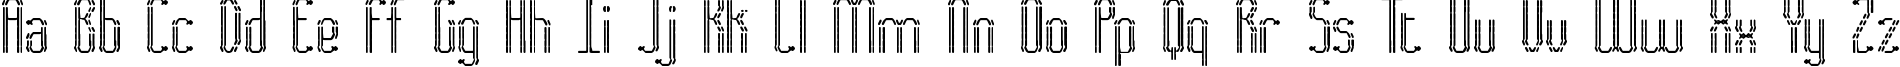 Пример написания английского алфавита шрифтом Fascii BRK